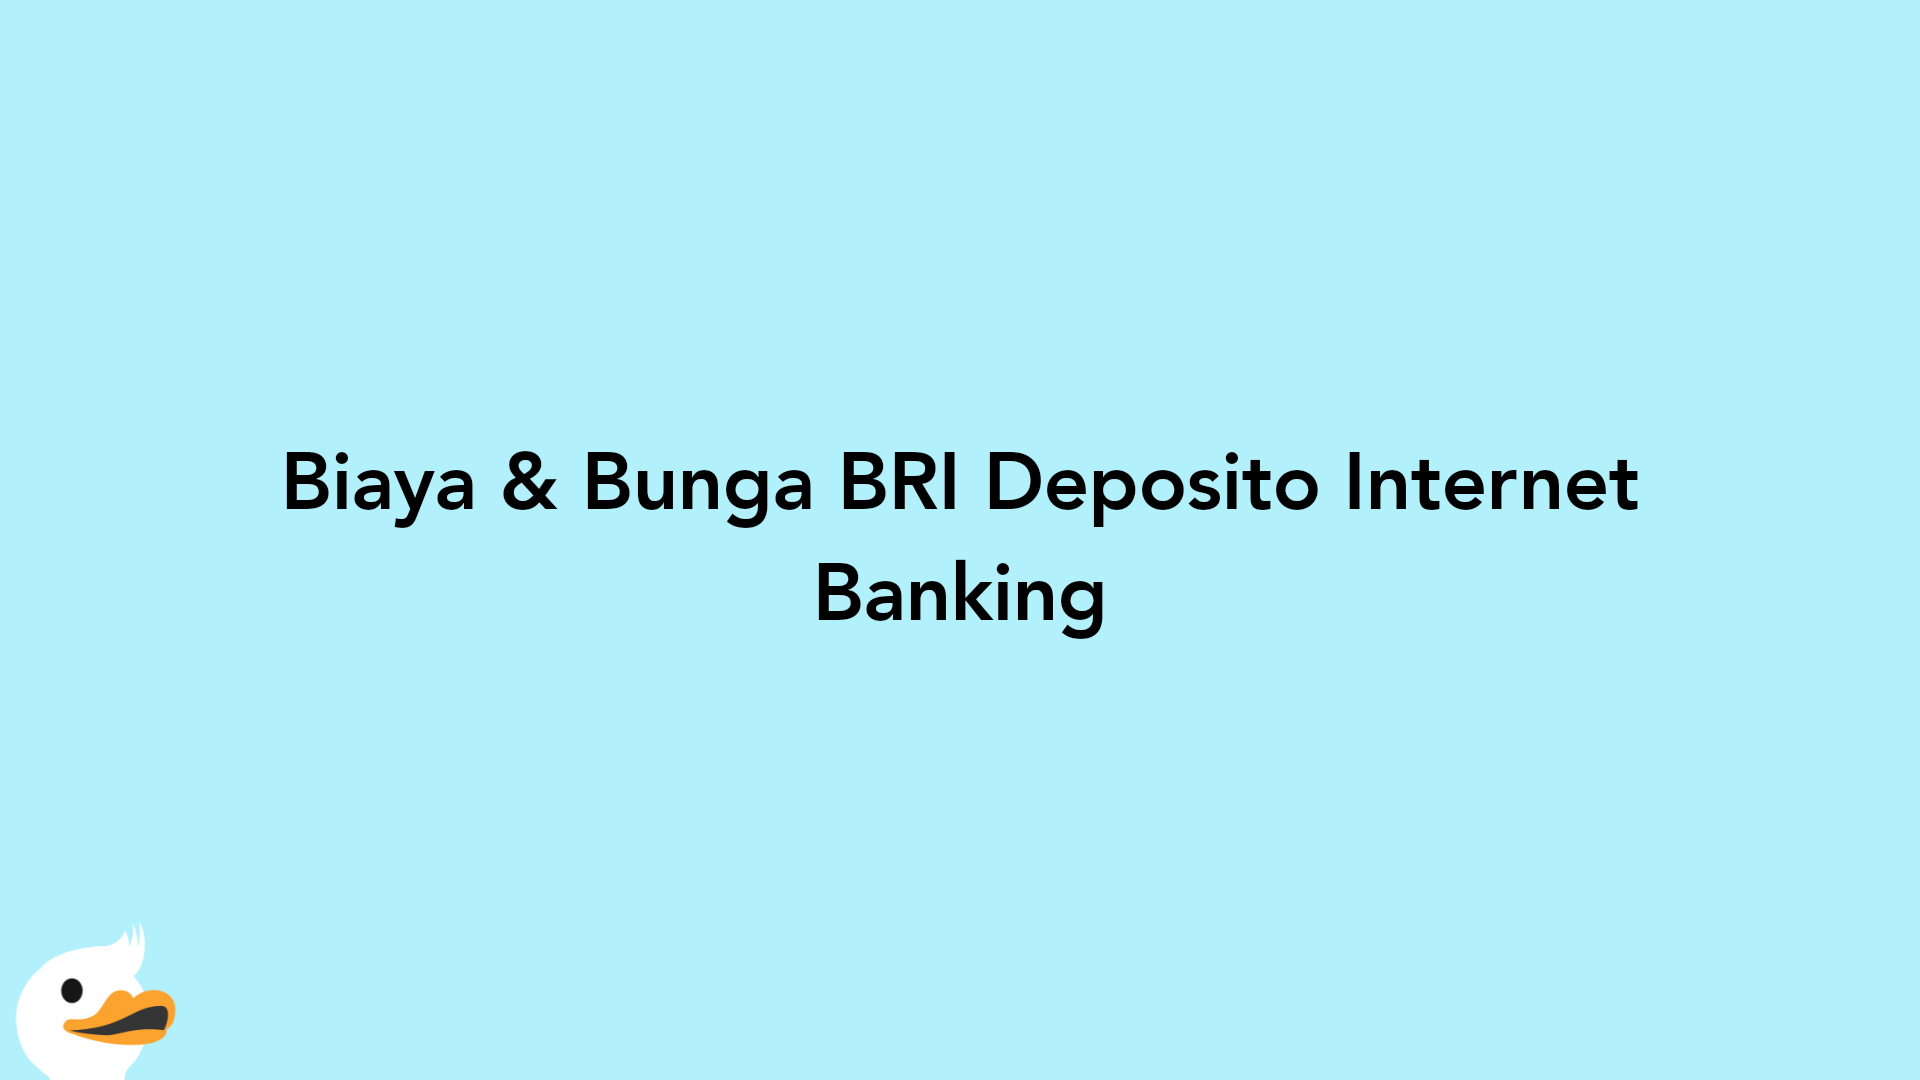 Biaya & Bunga BRI Deposito Internet Banking